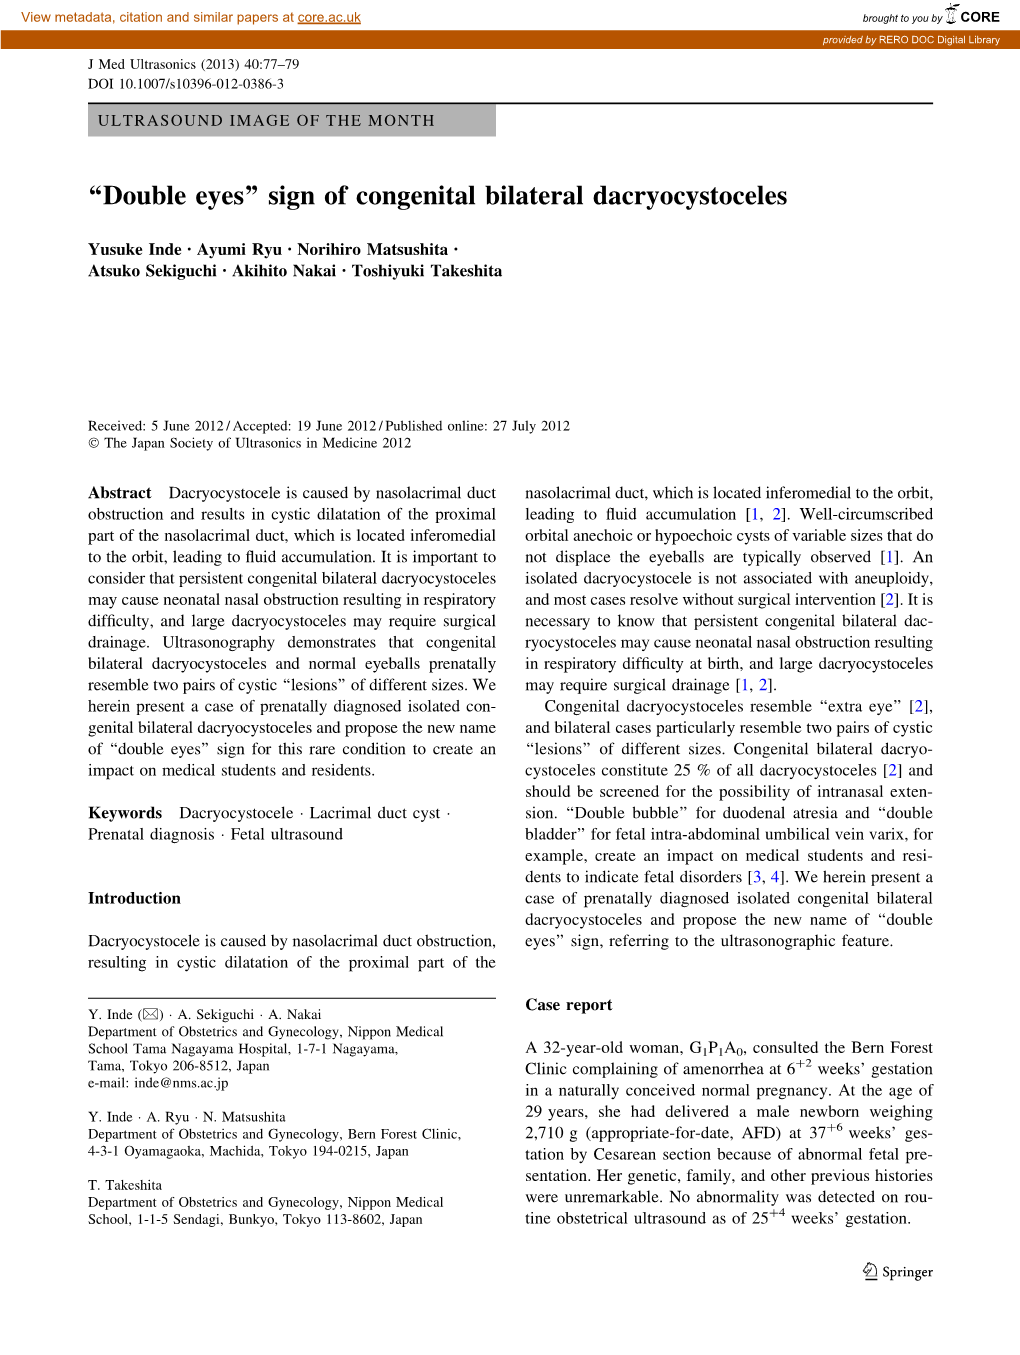 Sign of Congenital Bilateral Dacryocystoceles